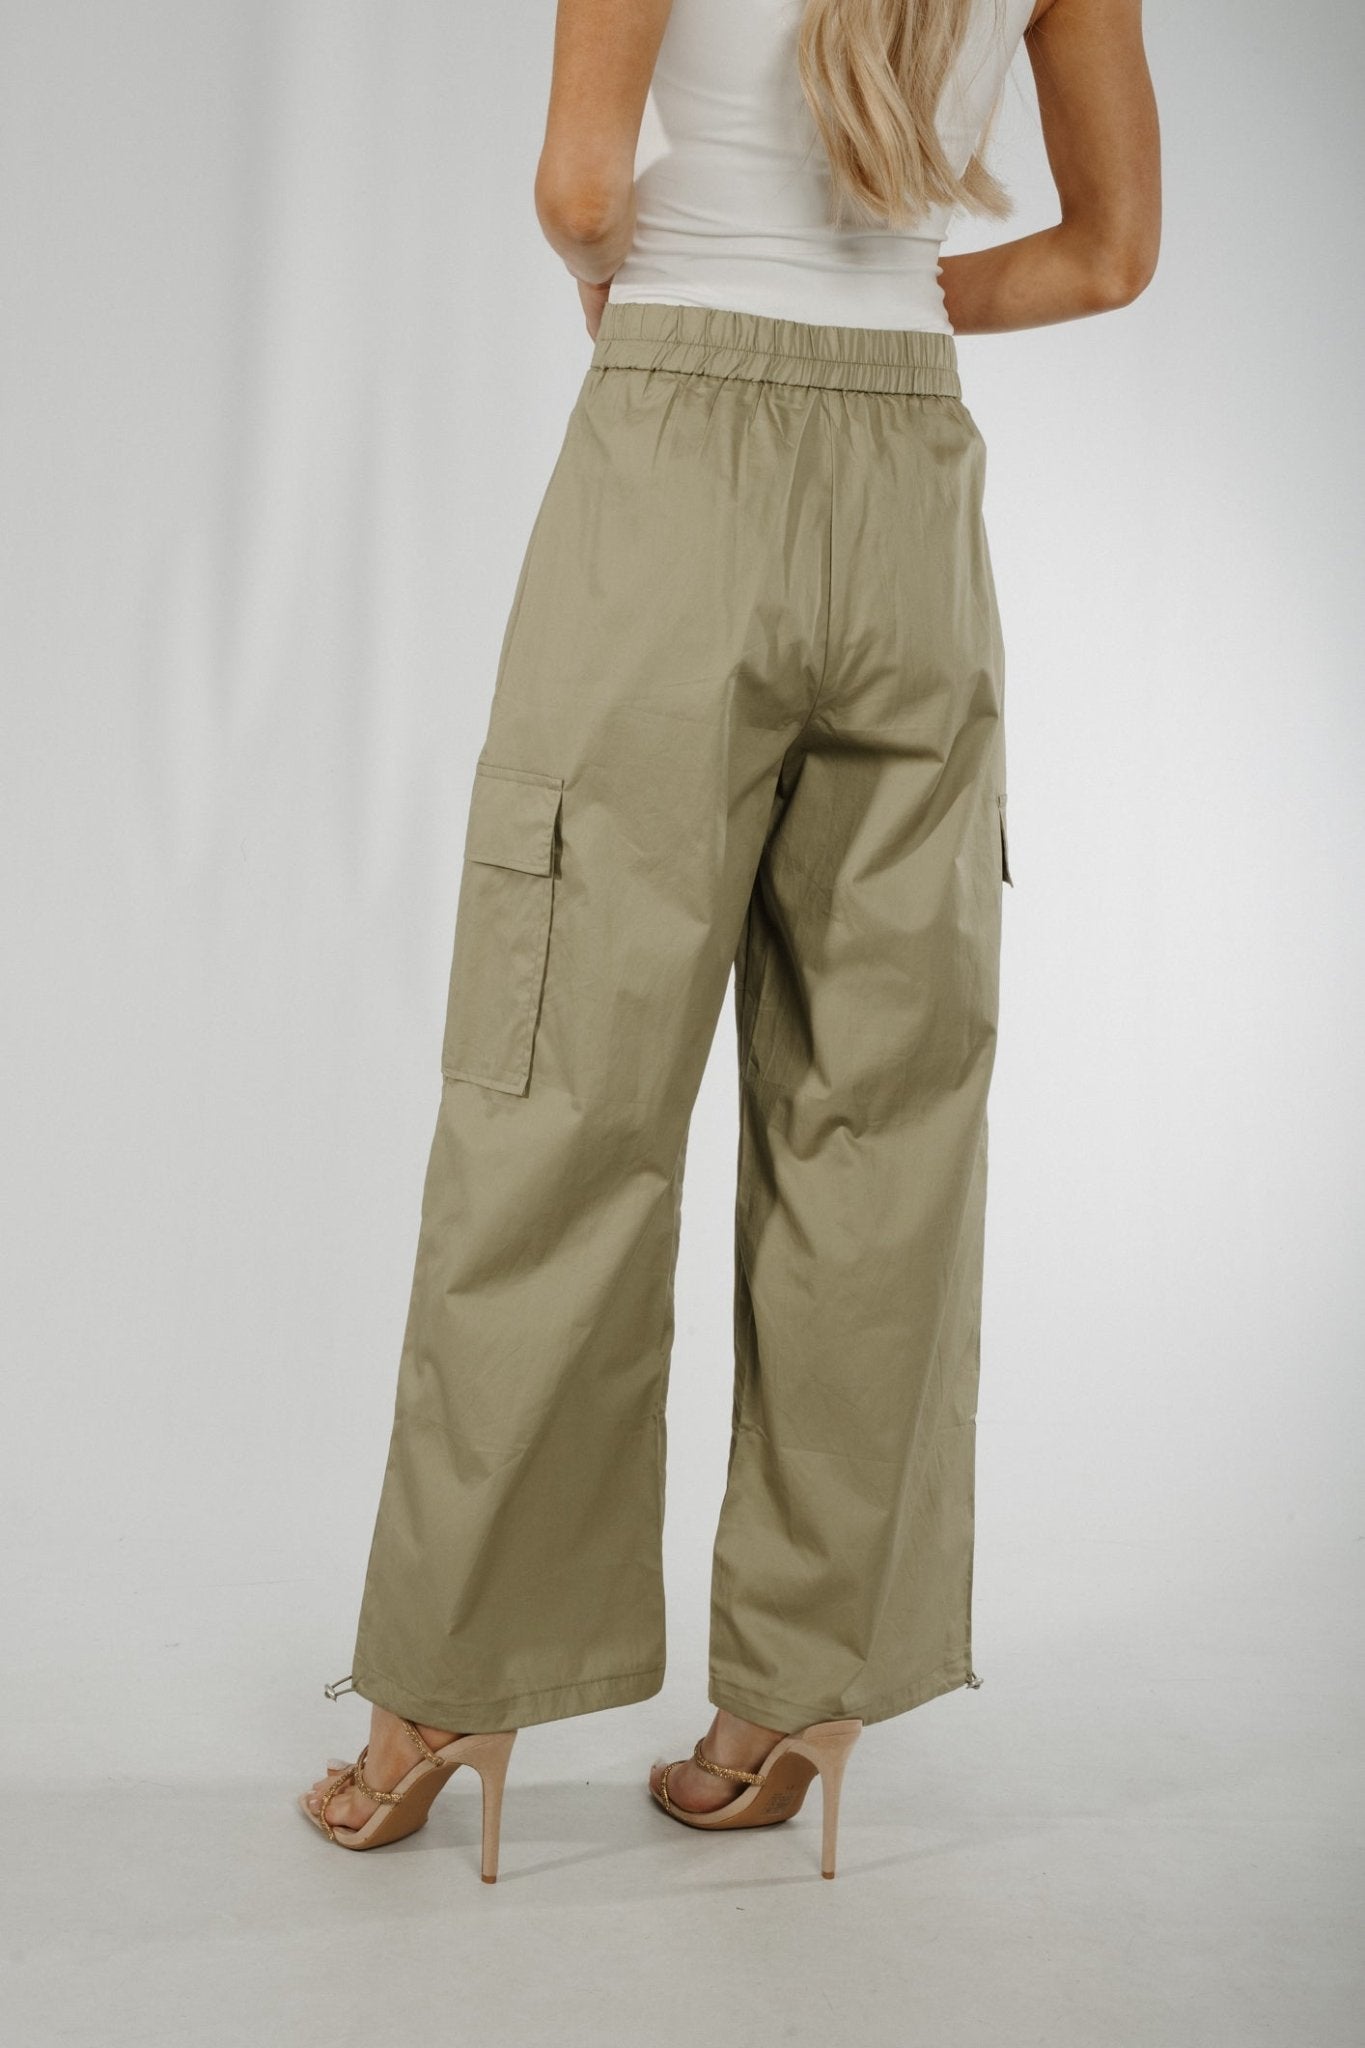 Holly Parachute Trousers In Khaki - The Walk in Wardrobe